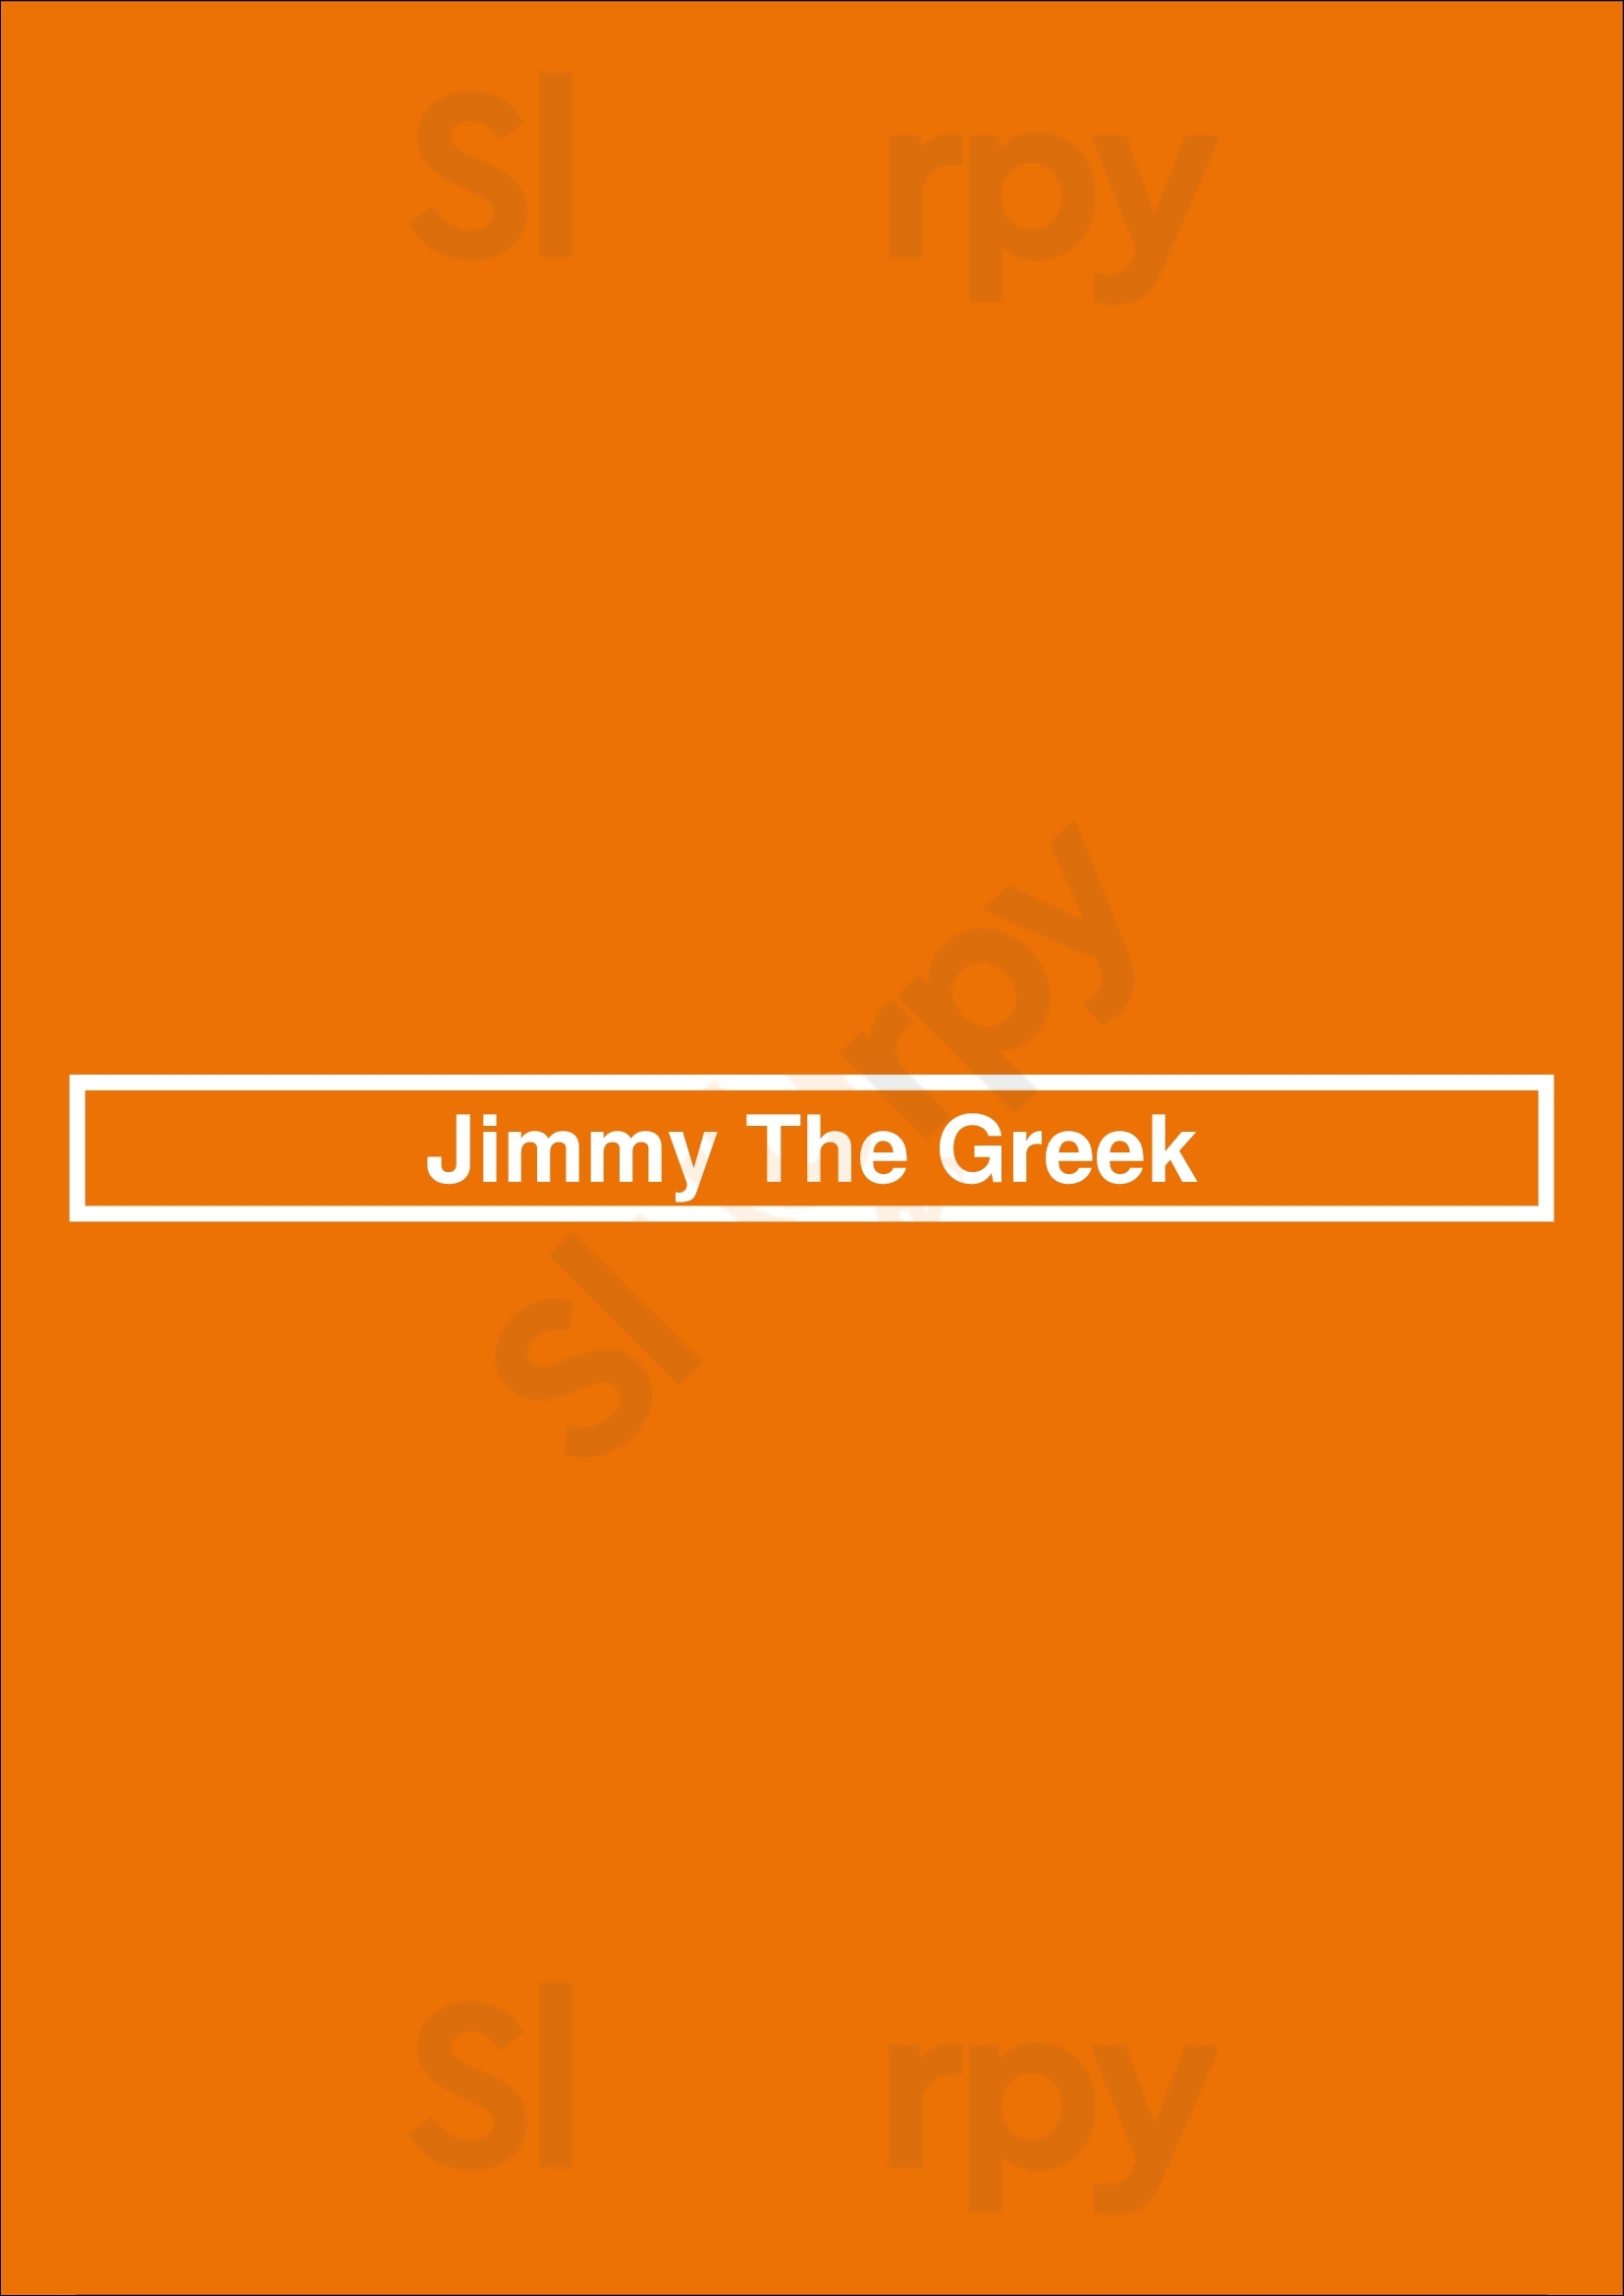 Jimmy The Greek Edmonton Menu - 1